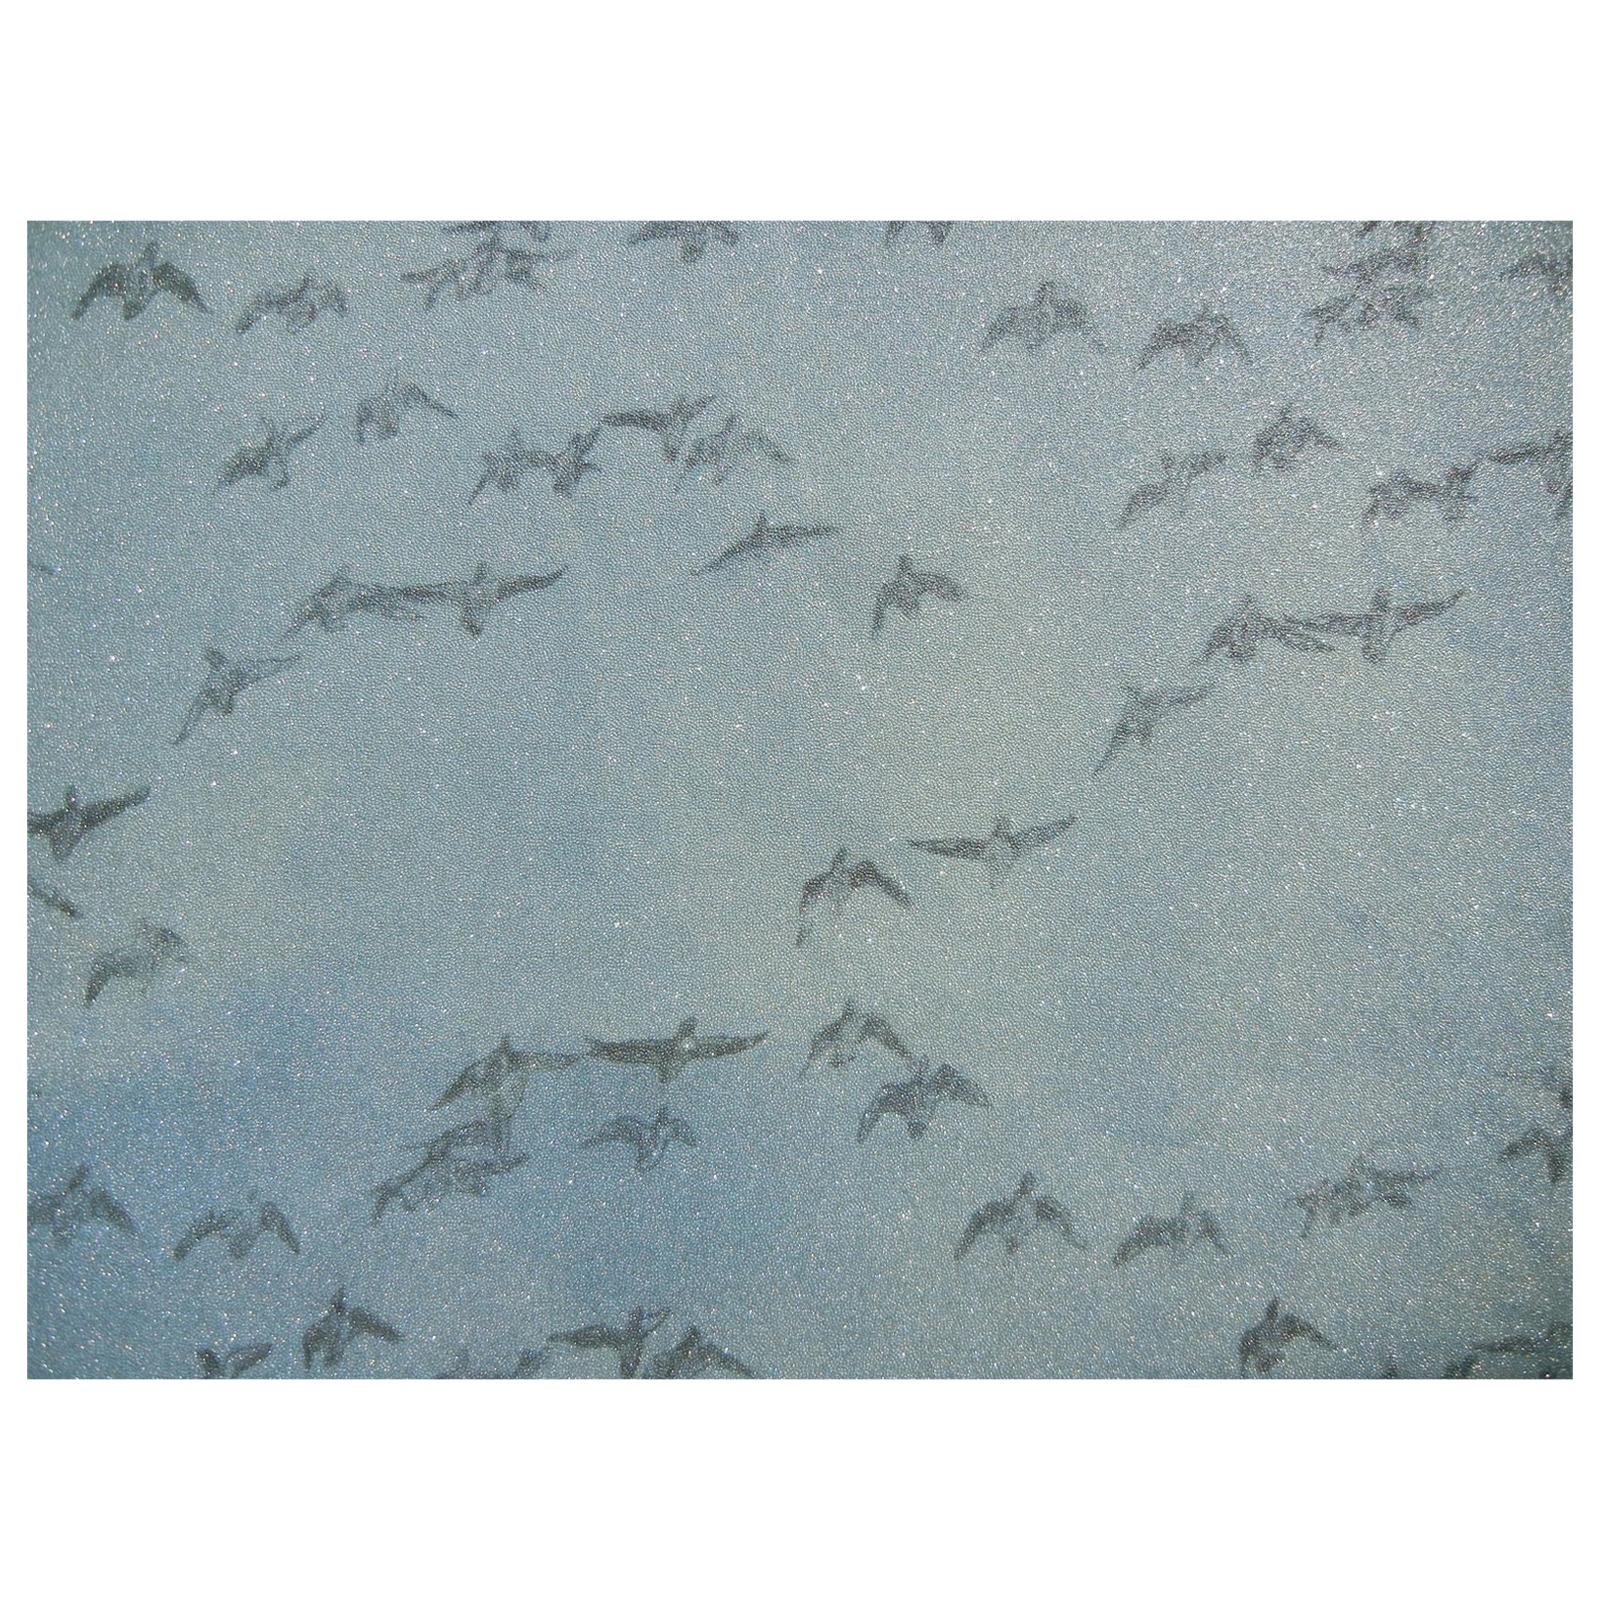 Birds in Flight Hand Drawn Bling Wallpaper by Groundplans For Sale